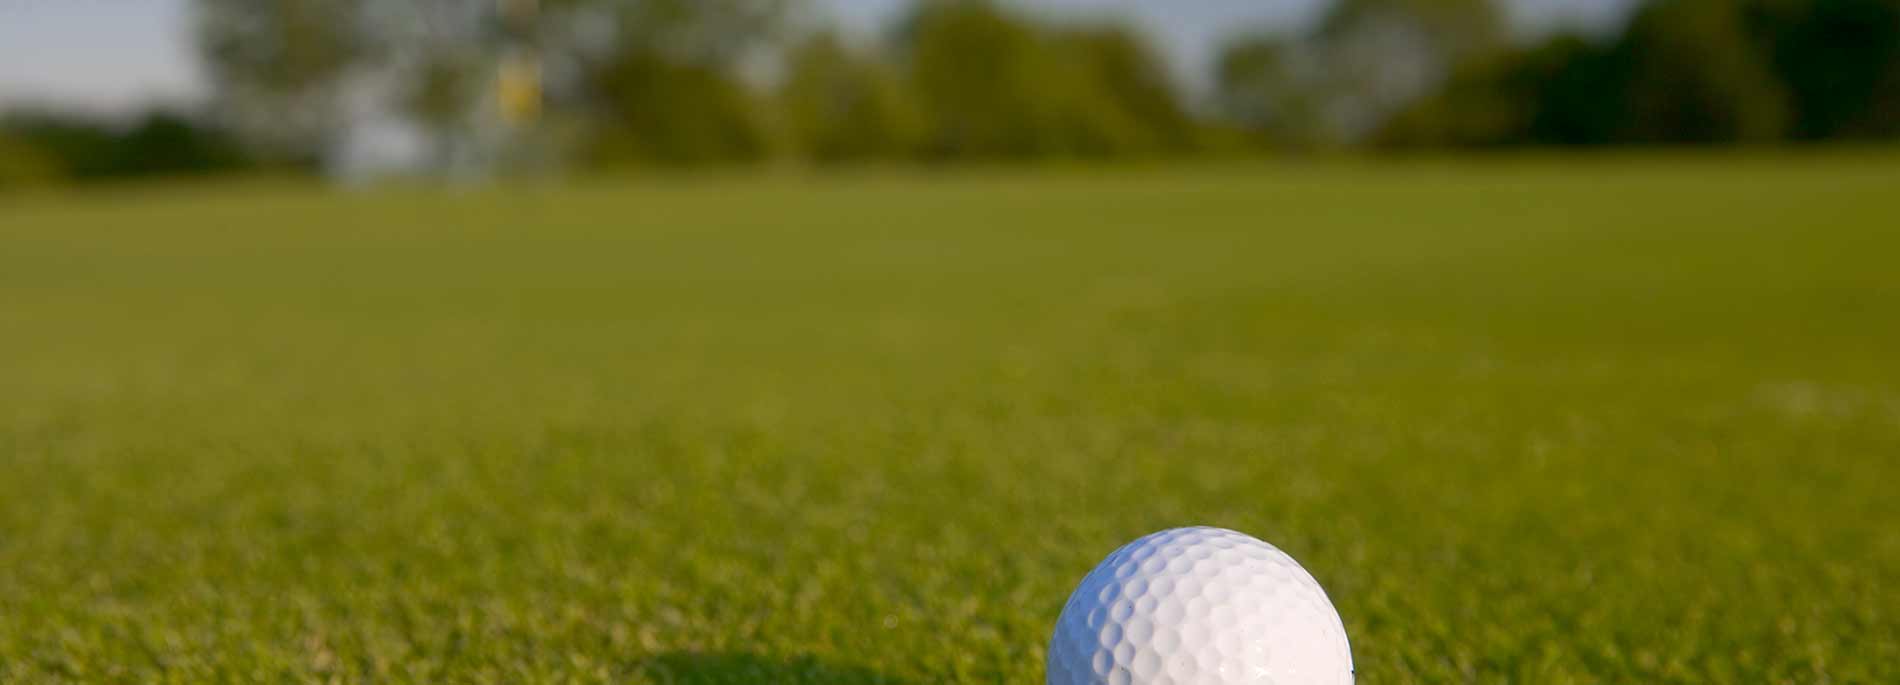 Maxweb Sponsor Prenton Golf Club